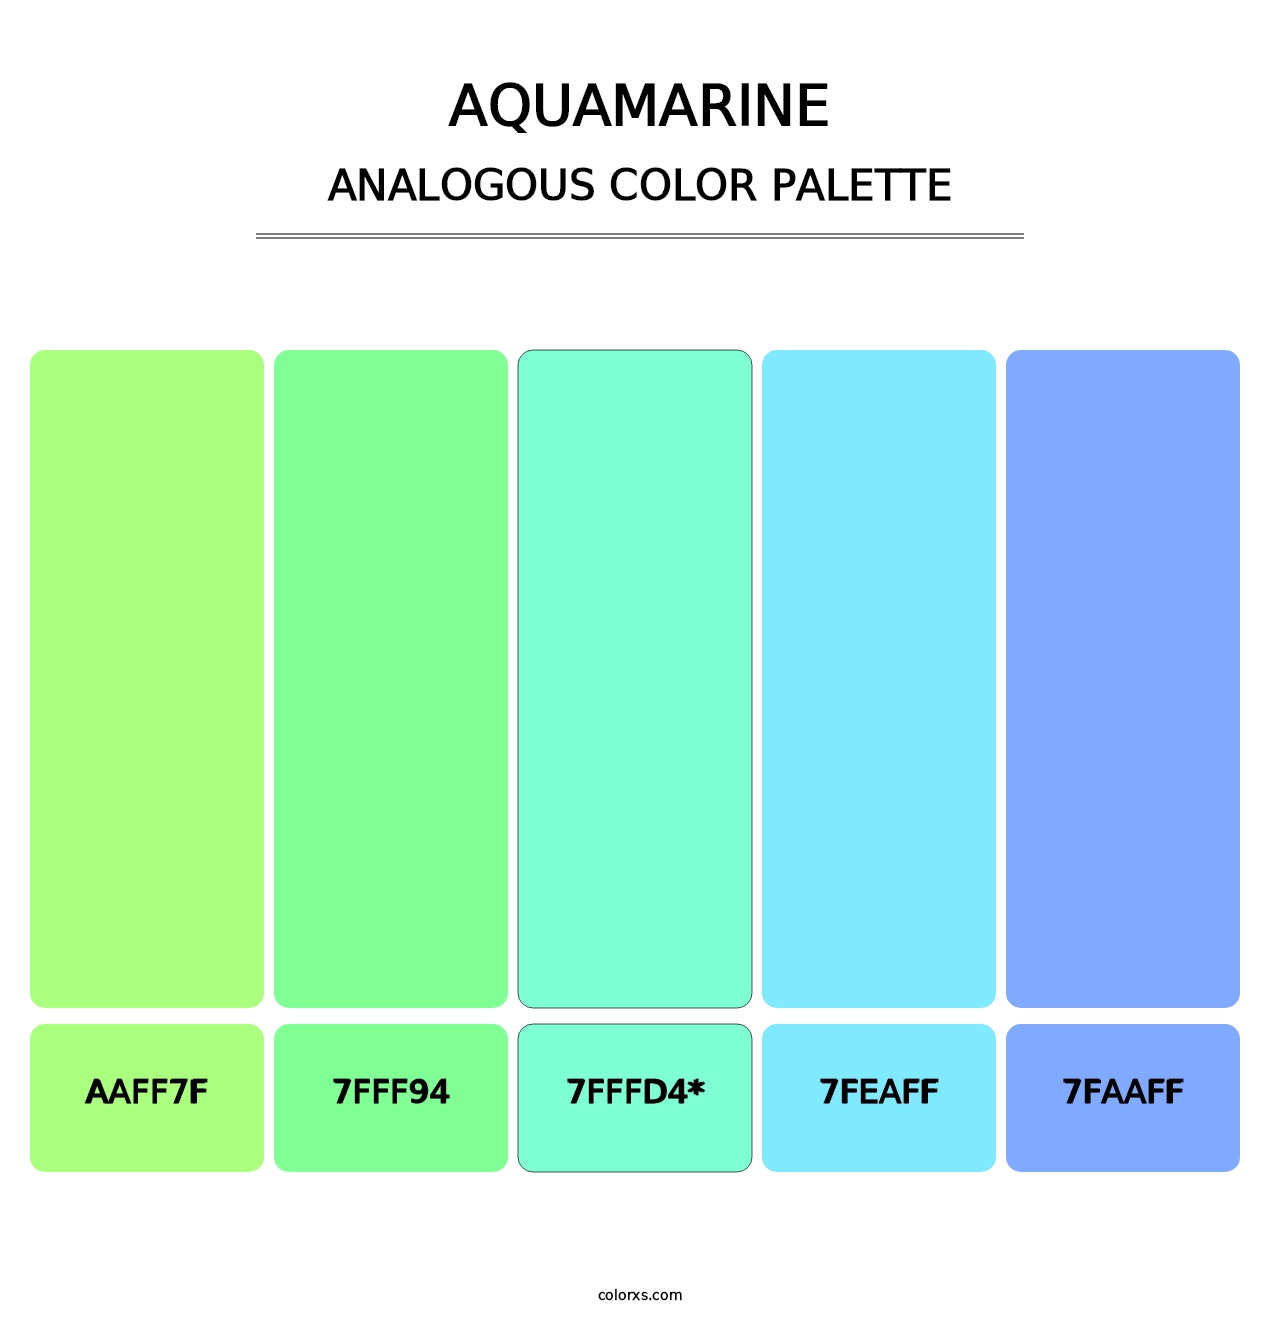 Aquamarine - Analogous Color Palette